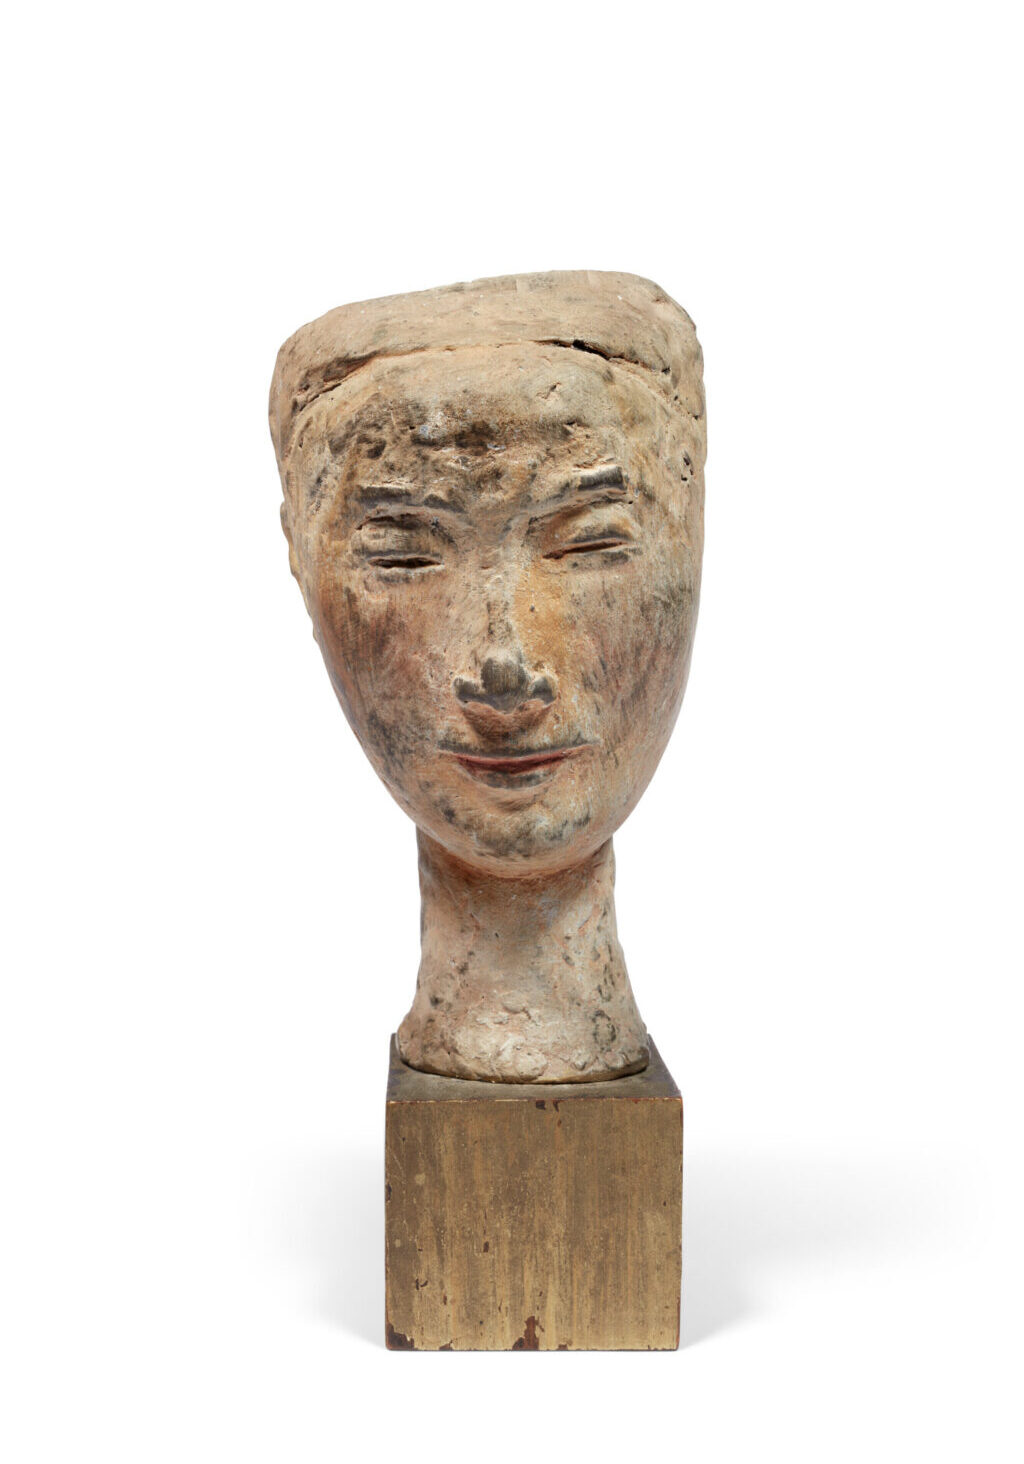 Vu Cao Dam (1908-2000), Tête de femme (Head of a Woman), 1939, terracotta sculpture with artist's base, Sculpture: 20 x 12 x 10 cm. (7 7/8 x 4 3/4 x 3 7/8 in.), Socle: 6 x 7 x 6.8 cm. (2 3/8 x 2 3/4 x 2 5/8 in.)